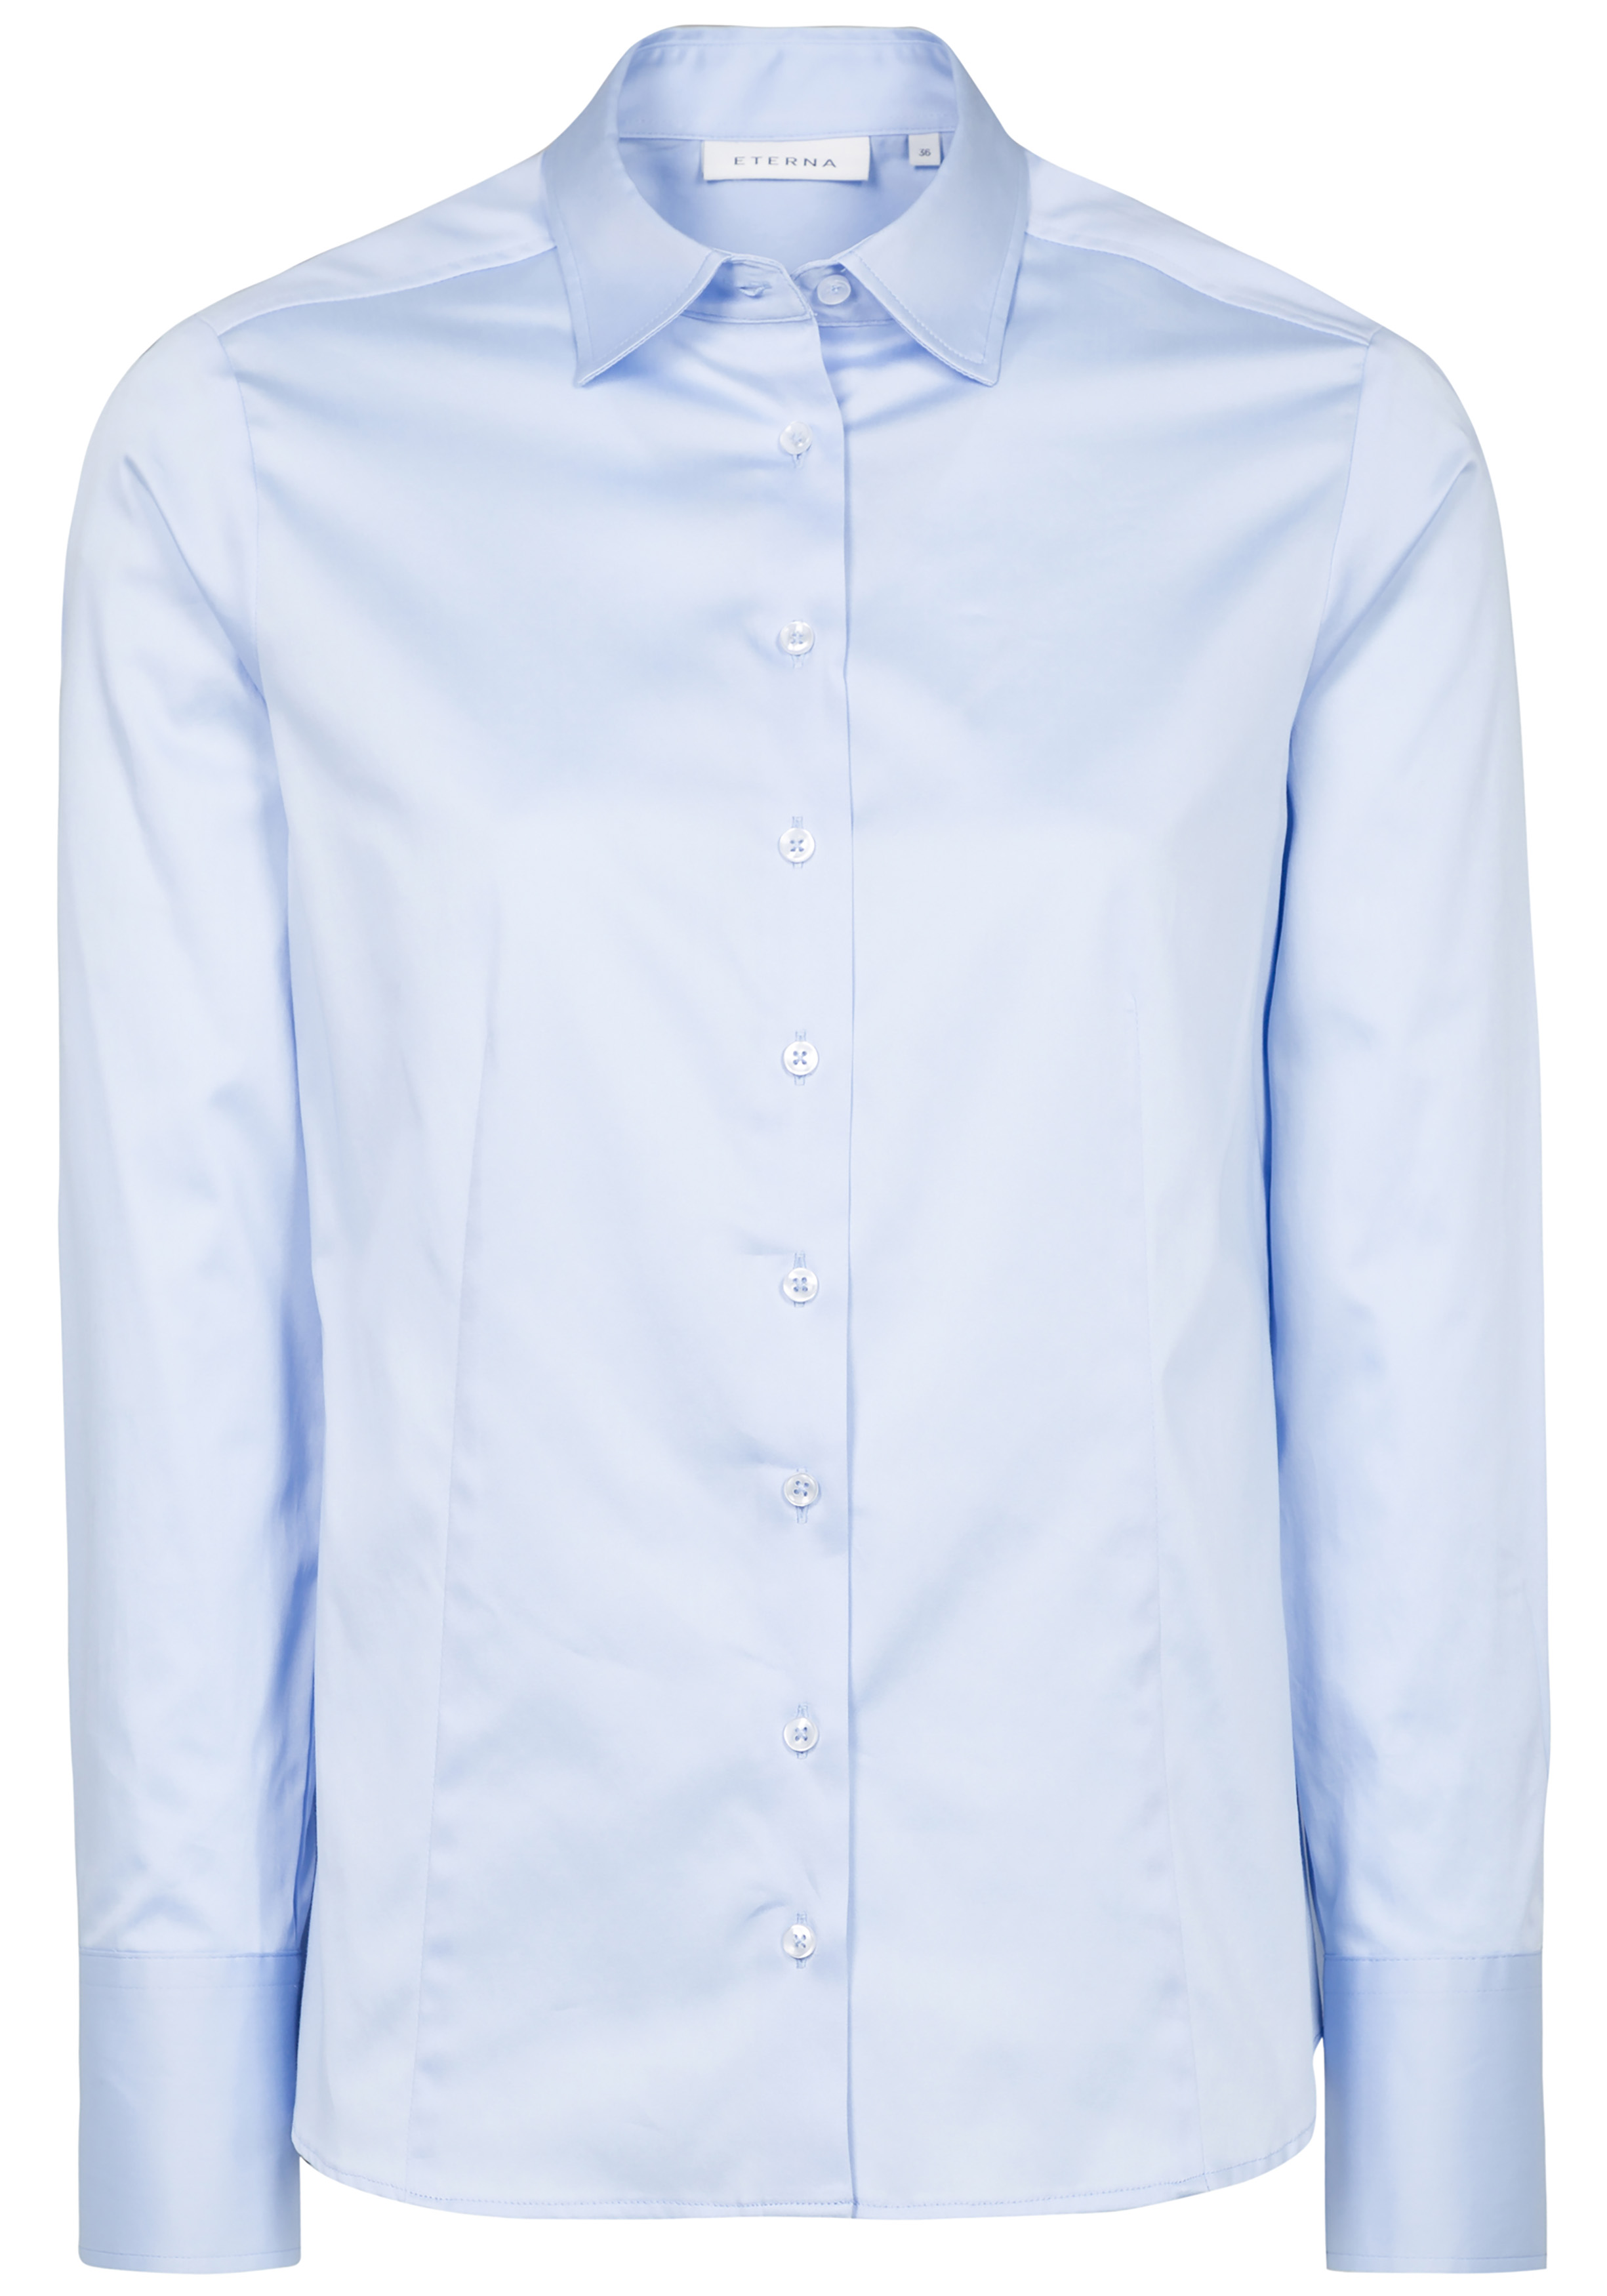 ETERNA dames blouse modern classic, stretch satijnbinding, lichtblauw